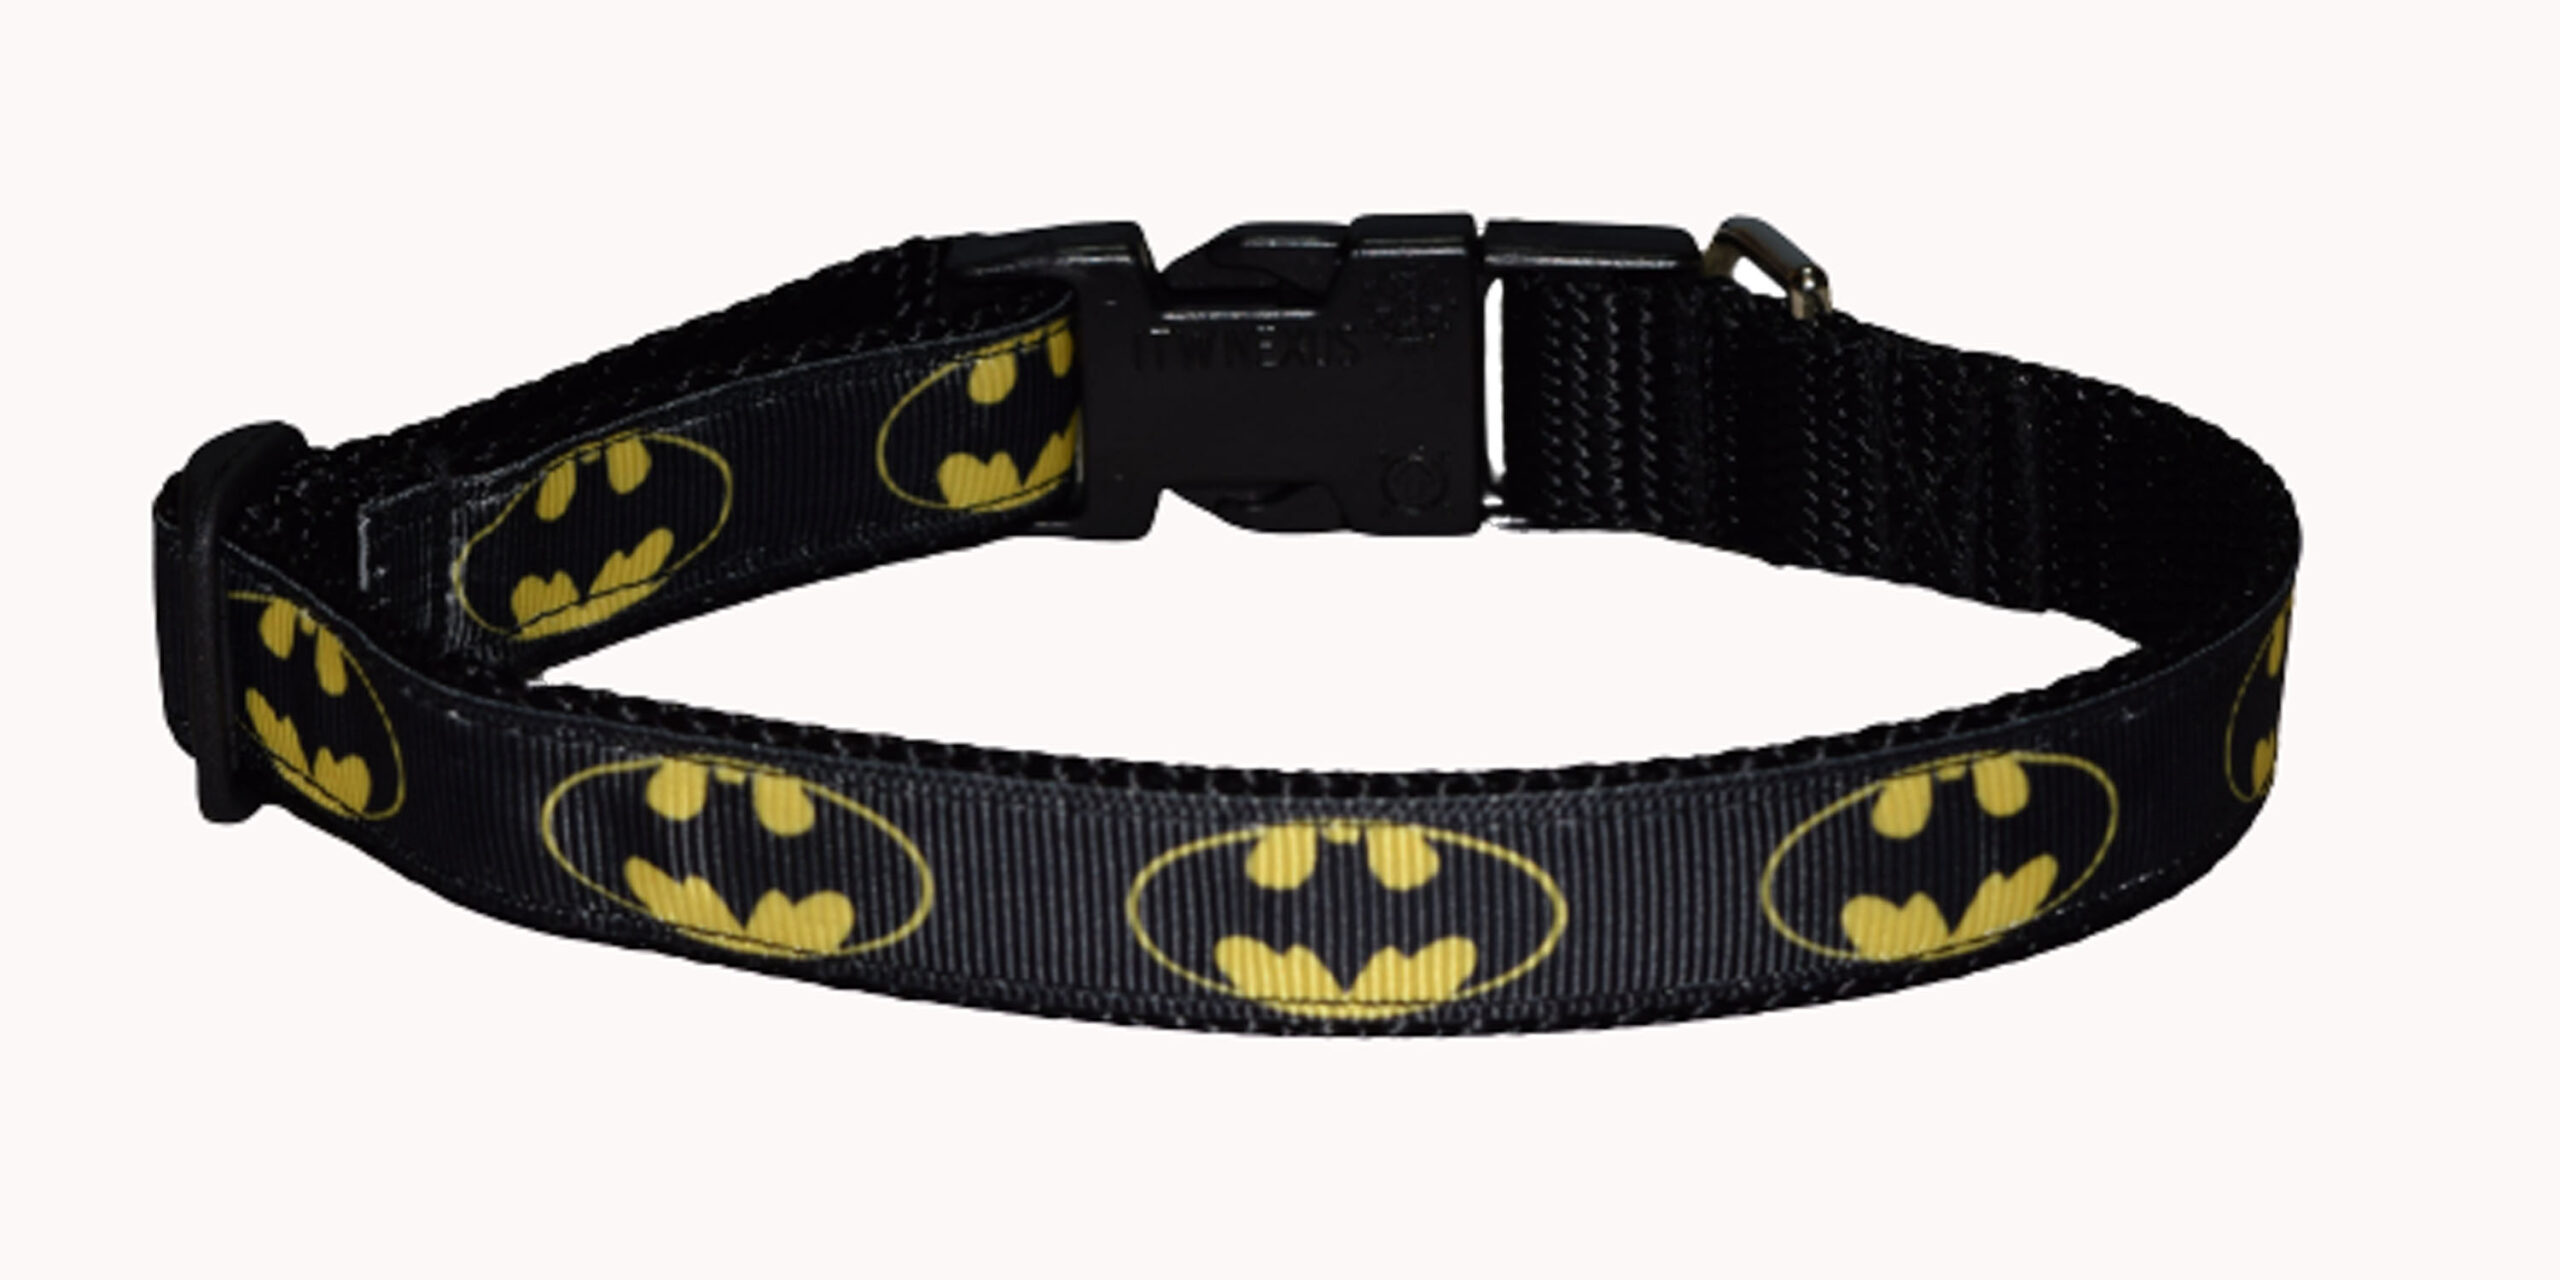 Batman Wholesale Dog and Cat Collars